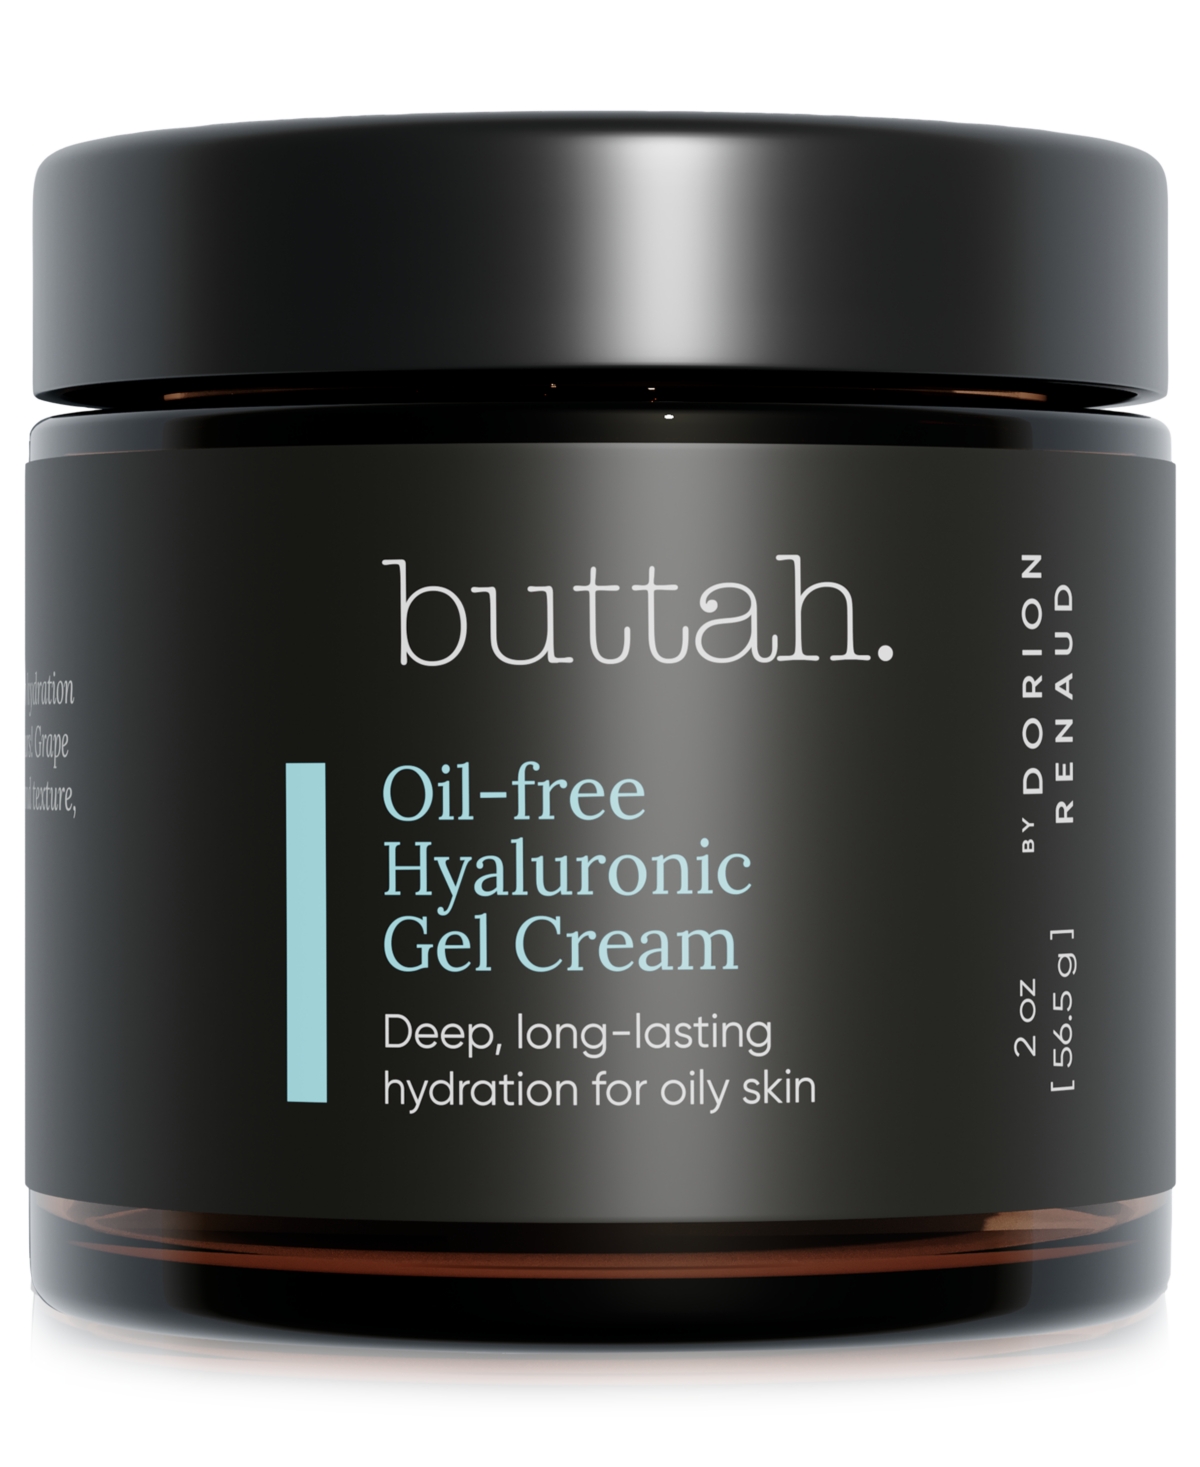 Buttah Skin Oil-Free Hyaluronic Gel Cream, 2-oz.